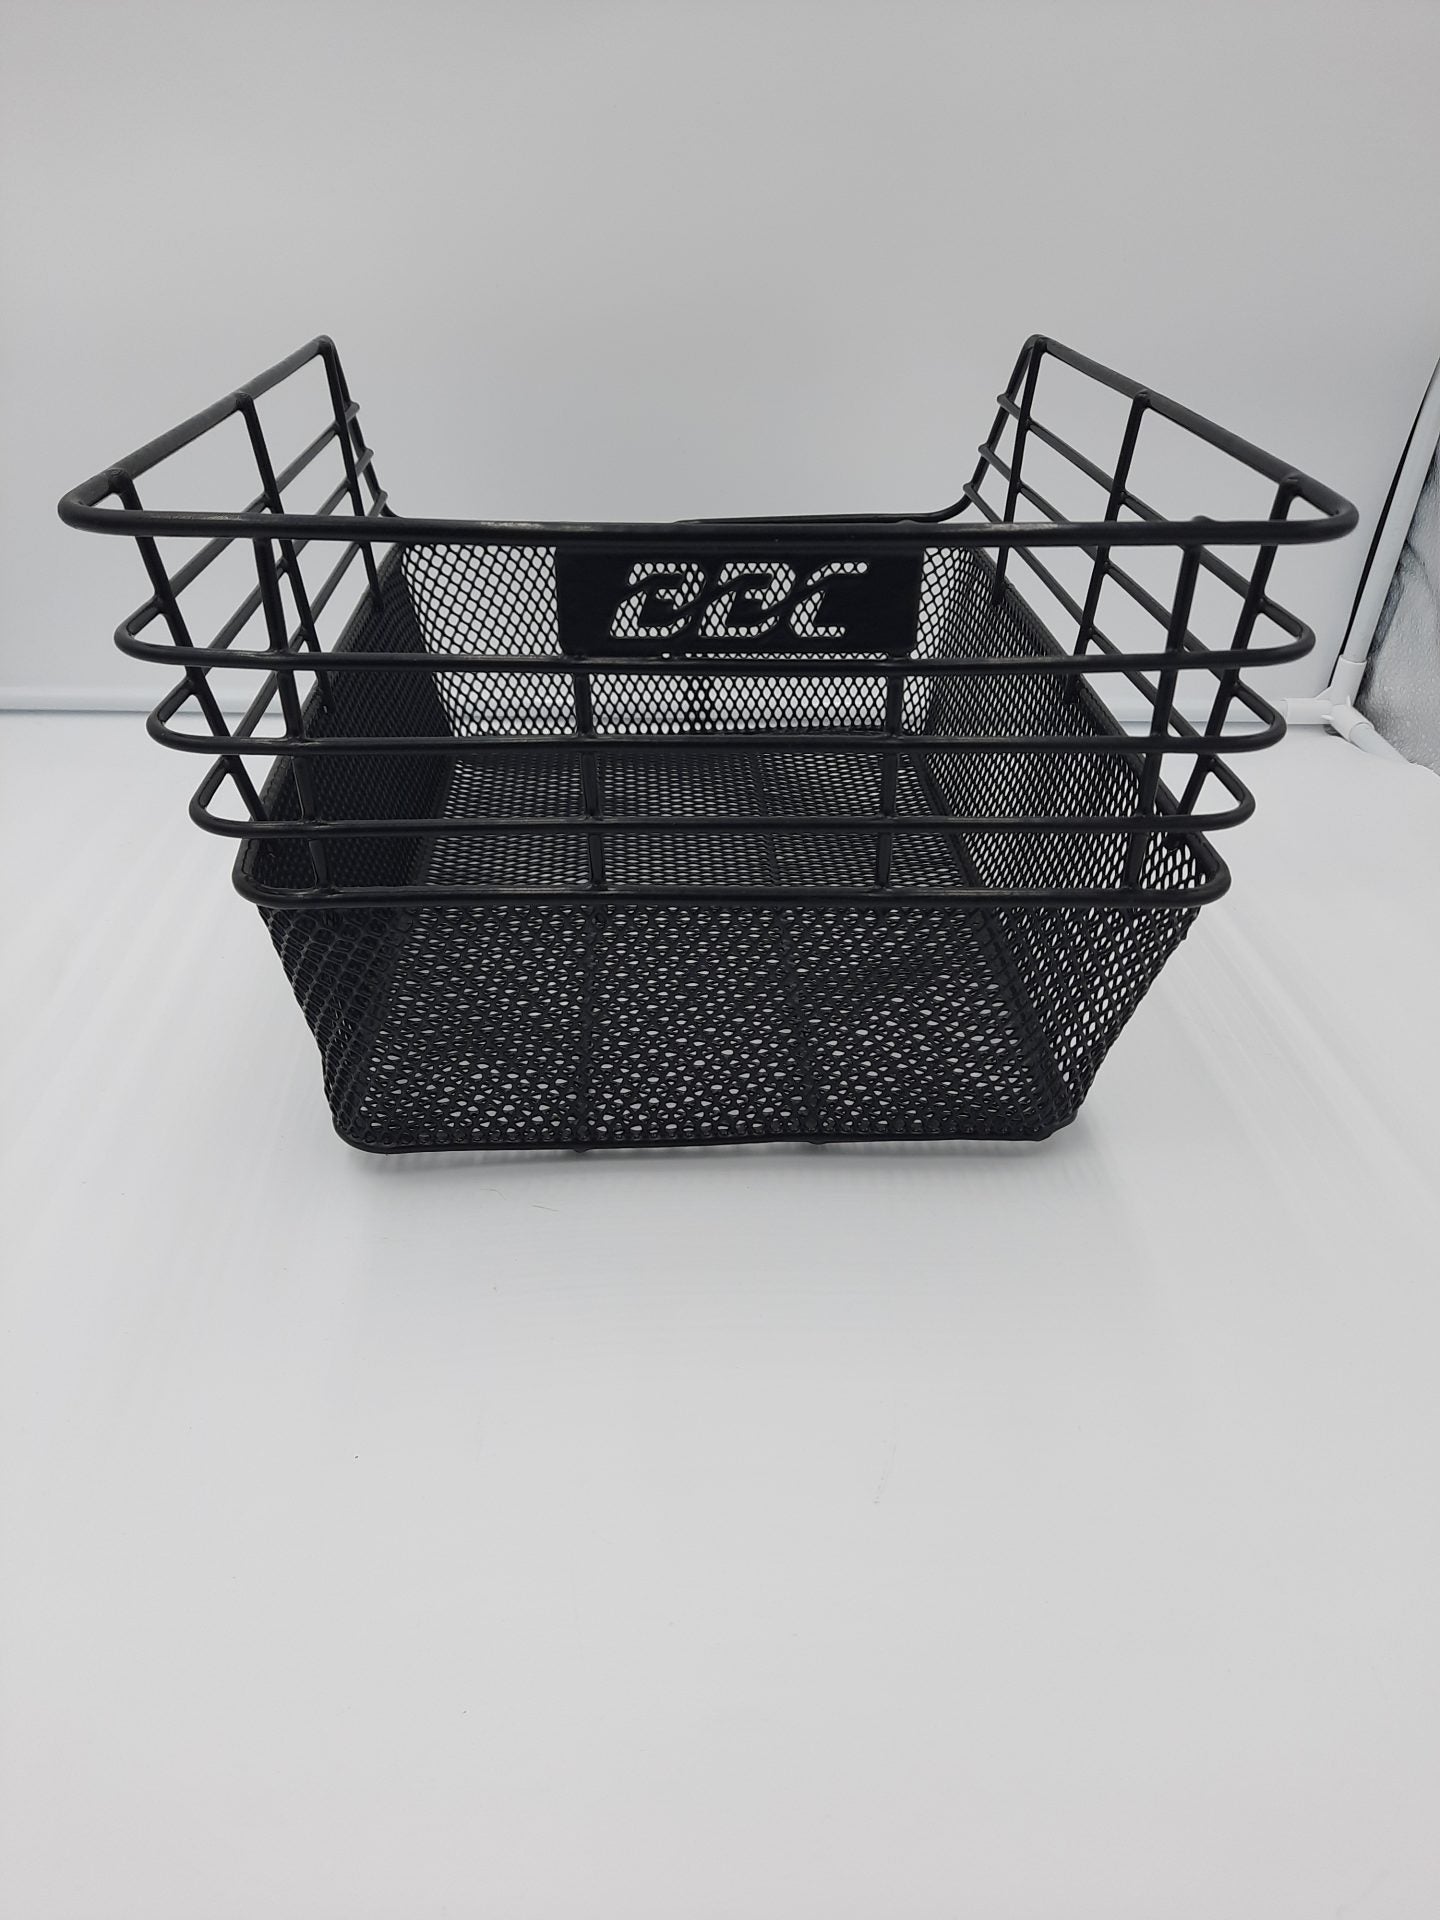 BBC Rear carrier Top Mount Basket - black steel mesh